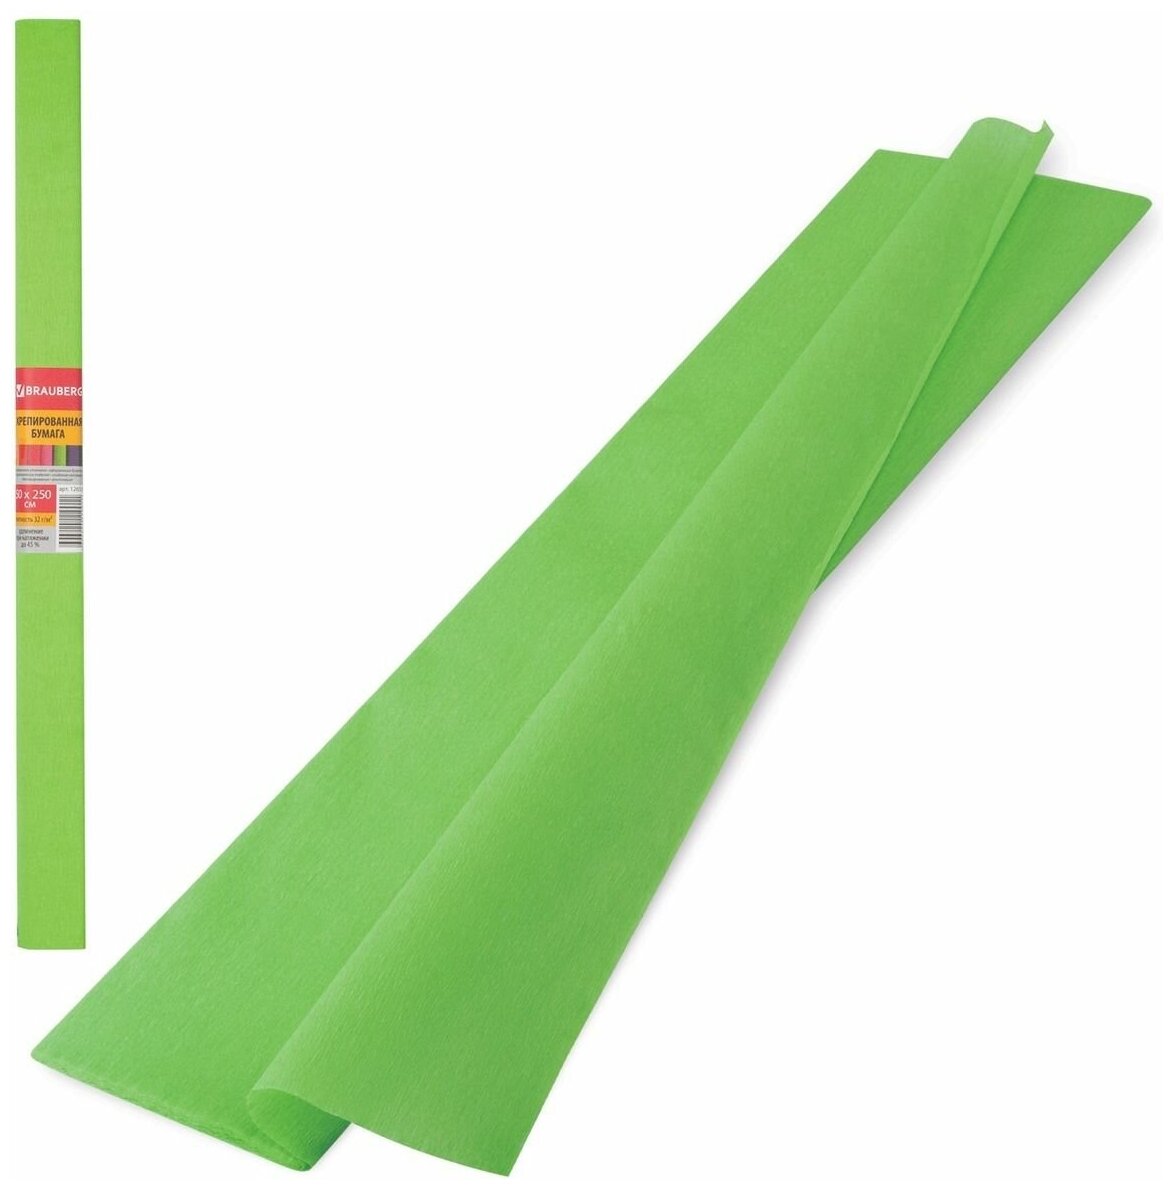 Цветная бумага Brauberg крепированная плотная, растяжение до 45%, 32 г/м, рулон, светло-зеленая, 50х250 см (126536)